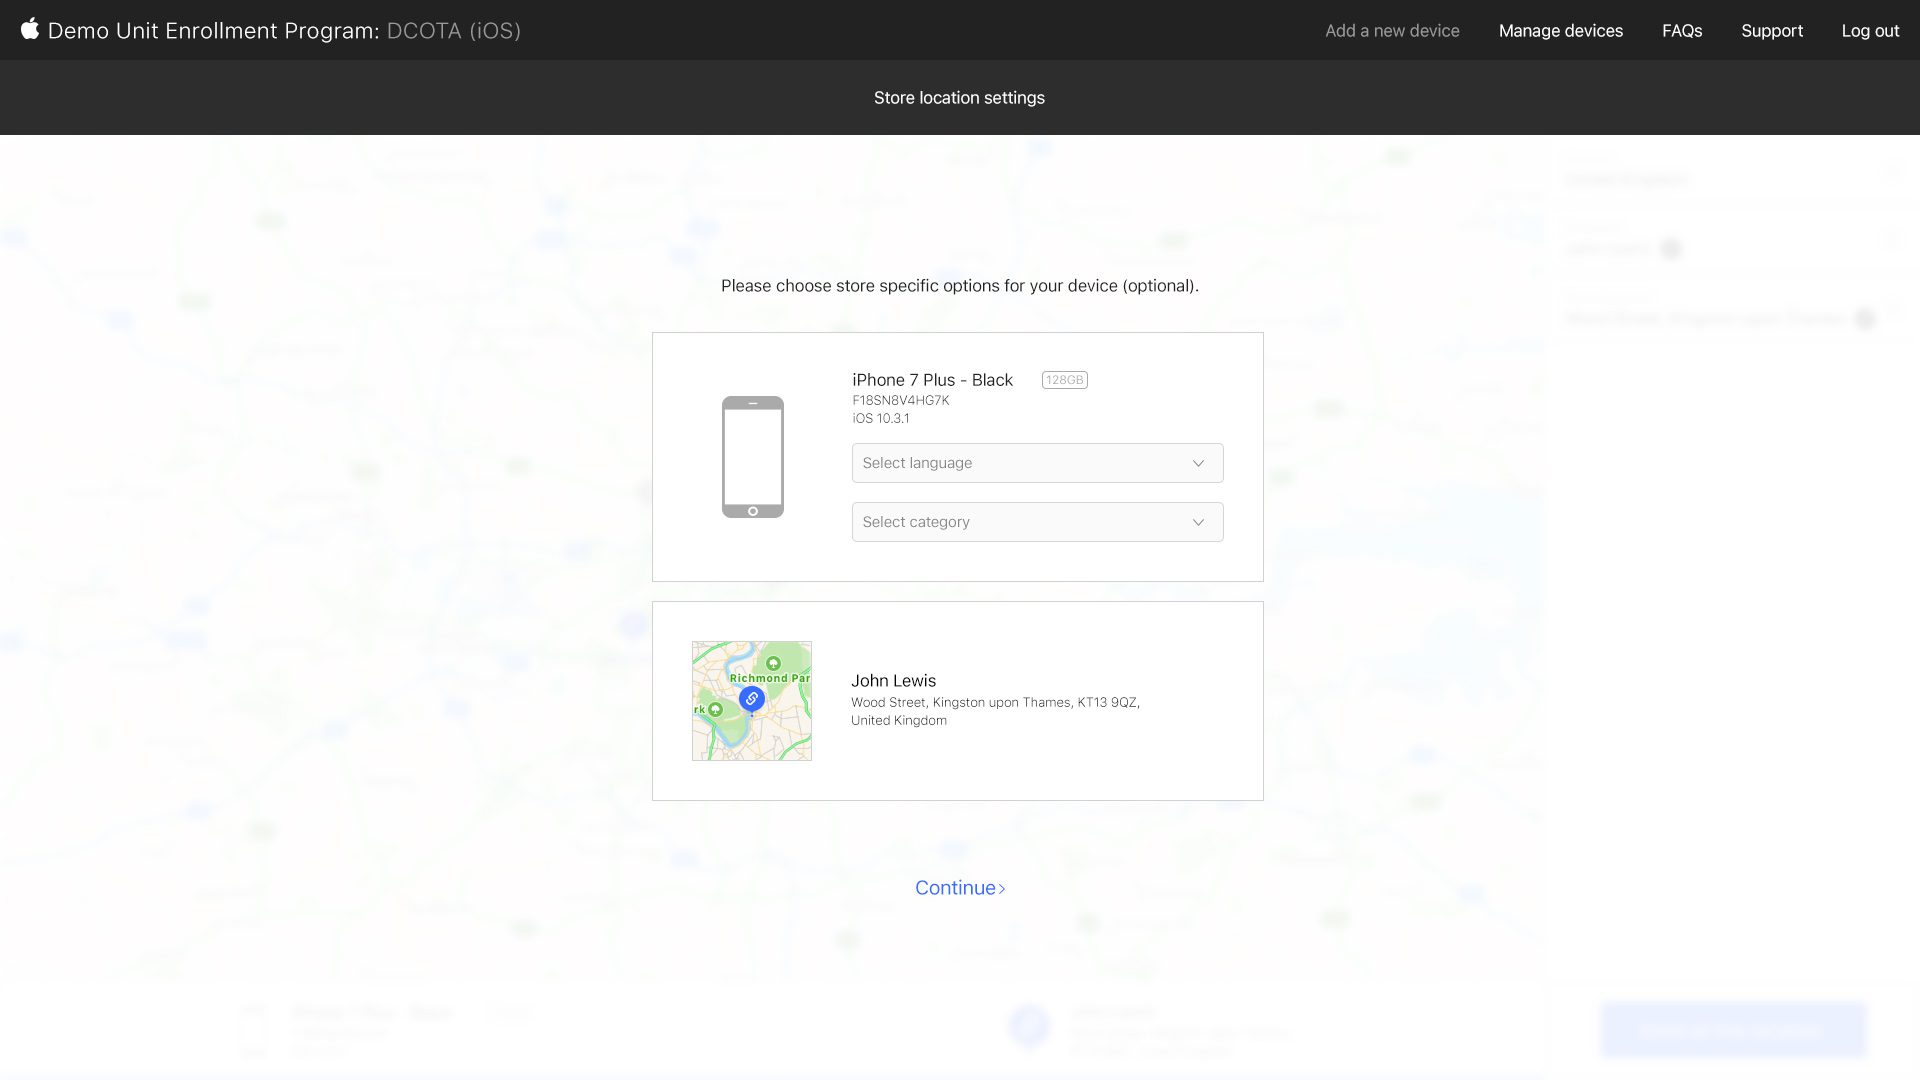 Apple Demo – Store Location Settings